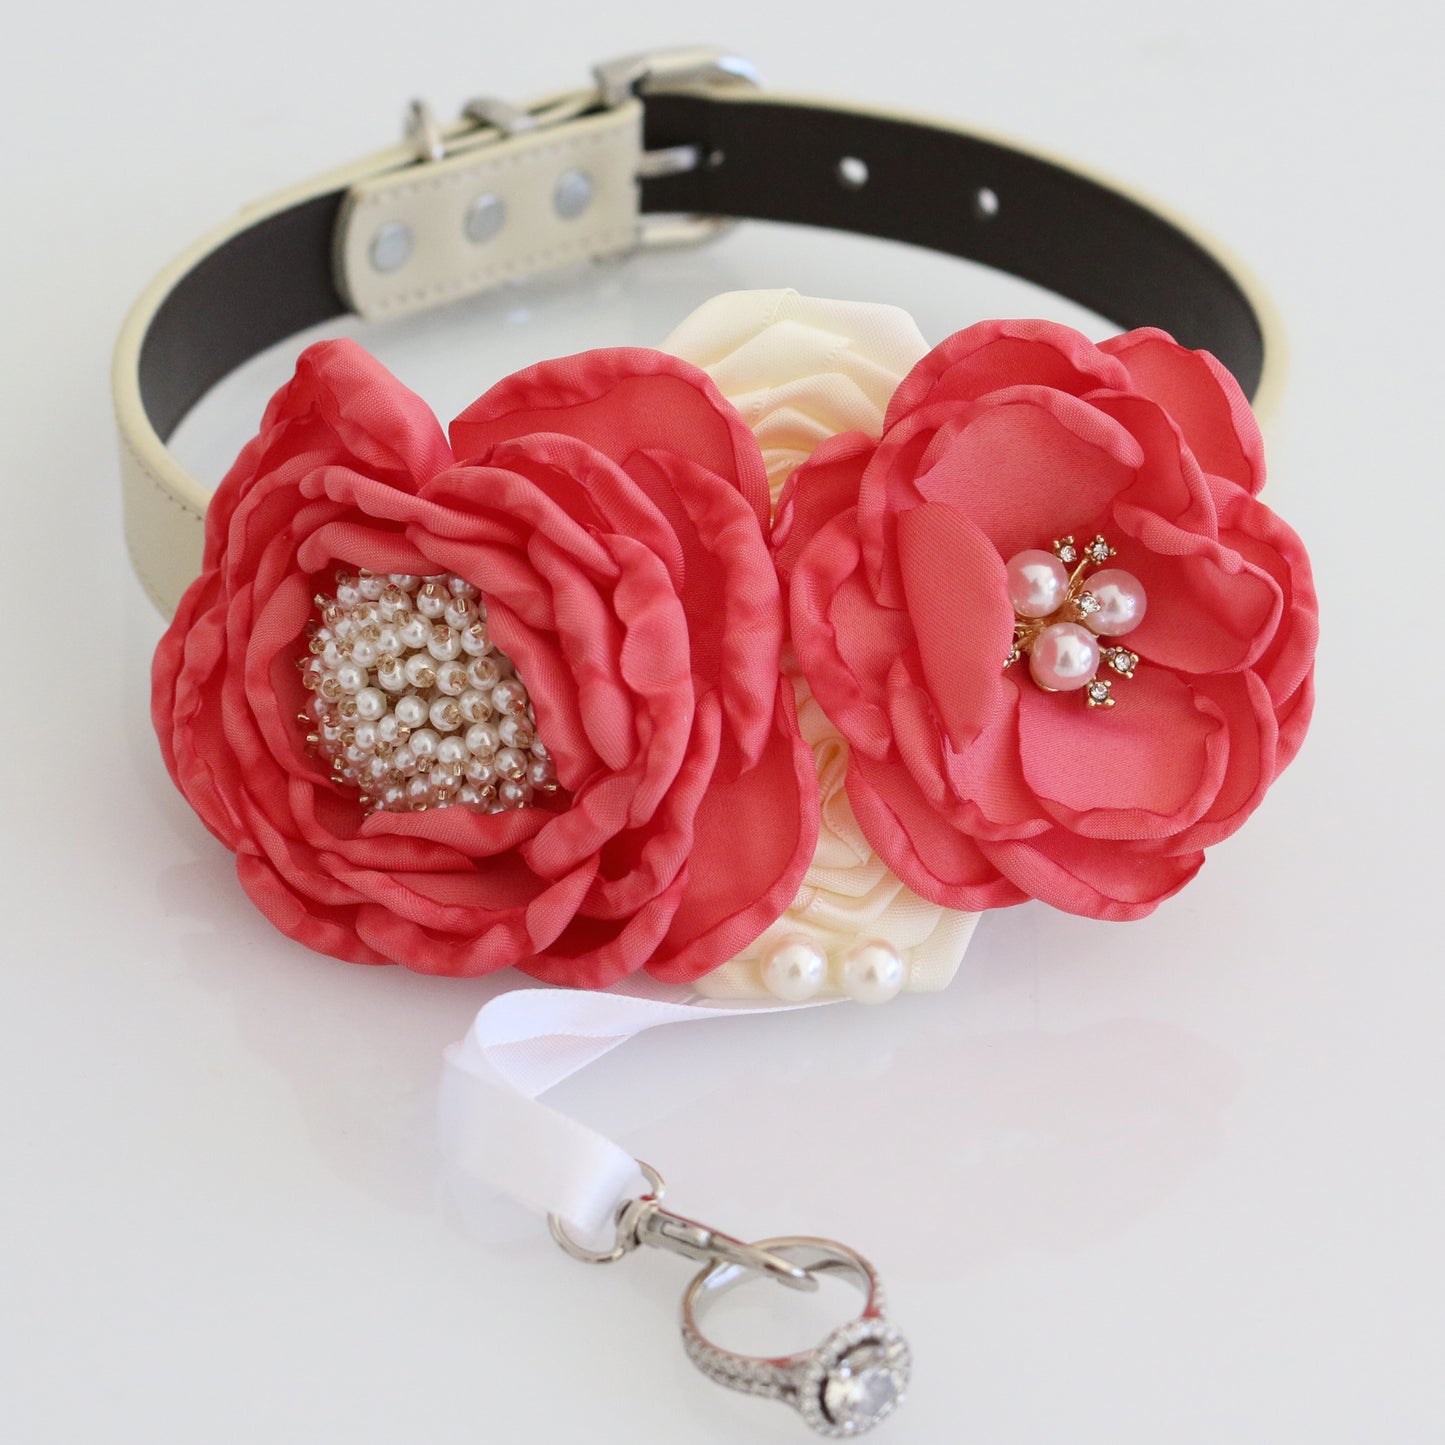 Coral Pearl beaded Flower dog collar, Dog ring bearer ring bearer proposal XS to XXL collar, handmade dog lover gift, Proposal, Beach wedding